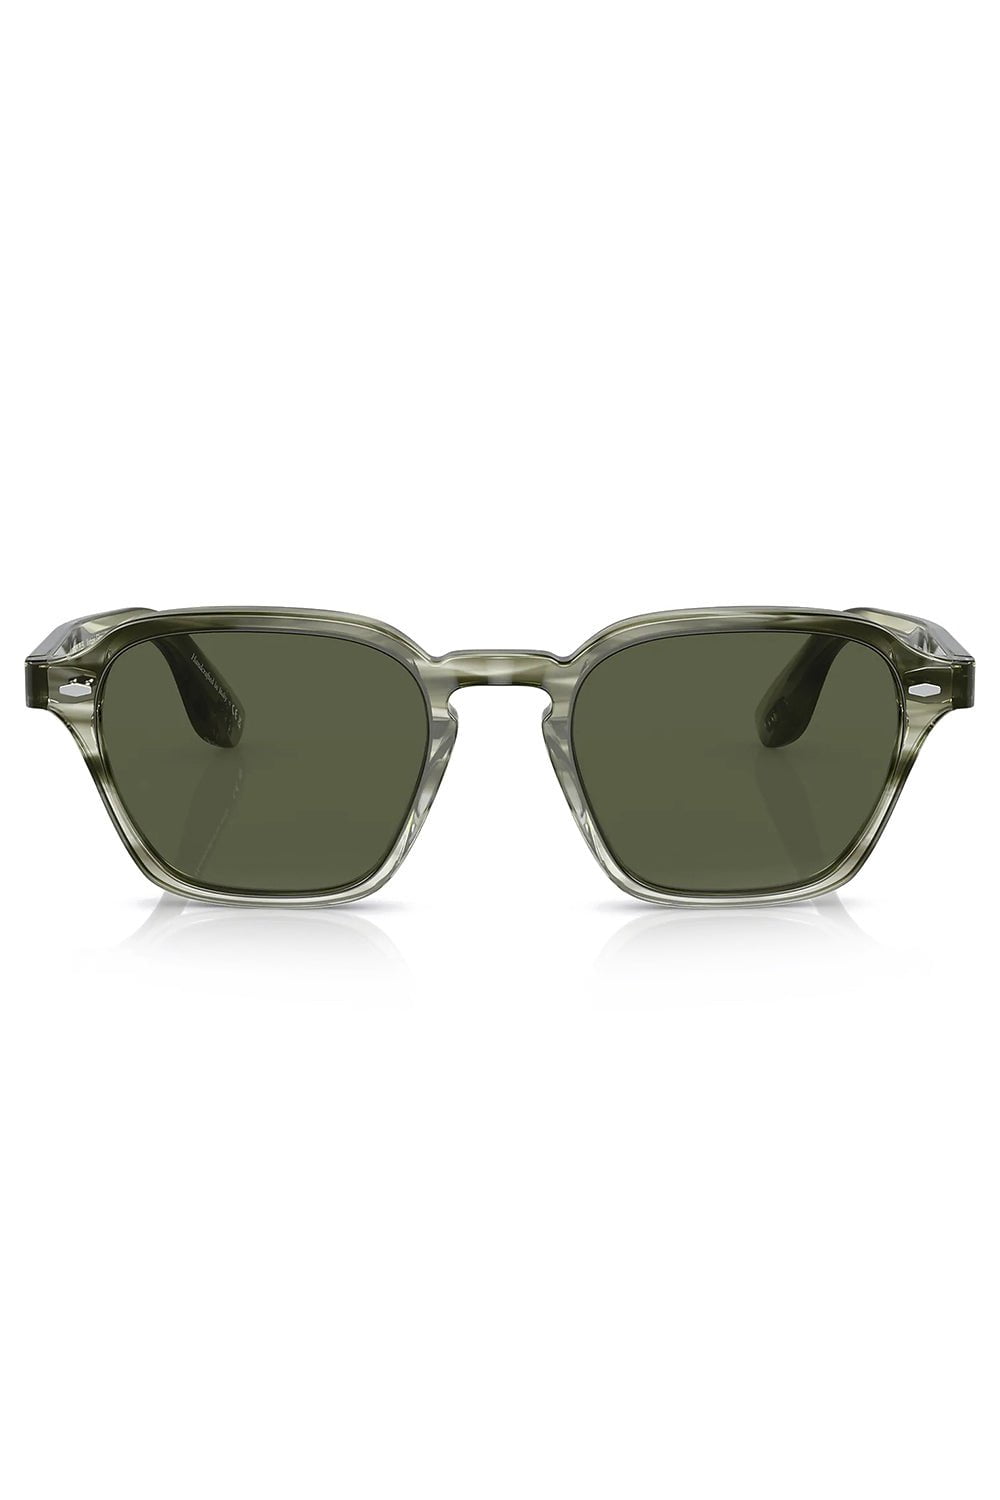 OLIVER PEOPLES-Griffo Sunglasses - Sunwashed Jade-WASHED JADE